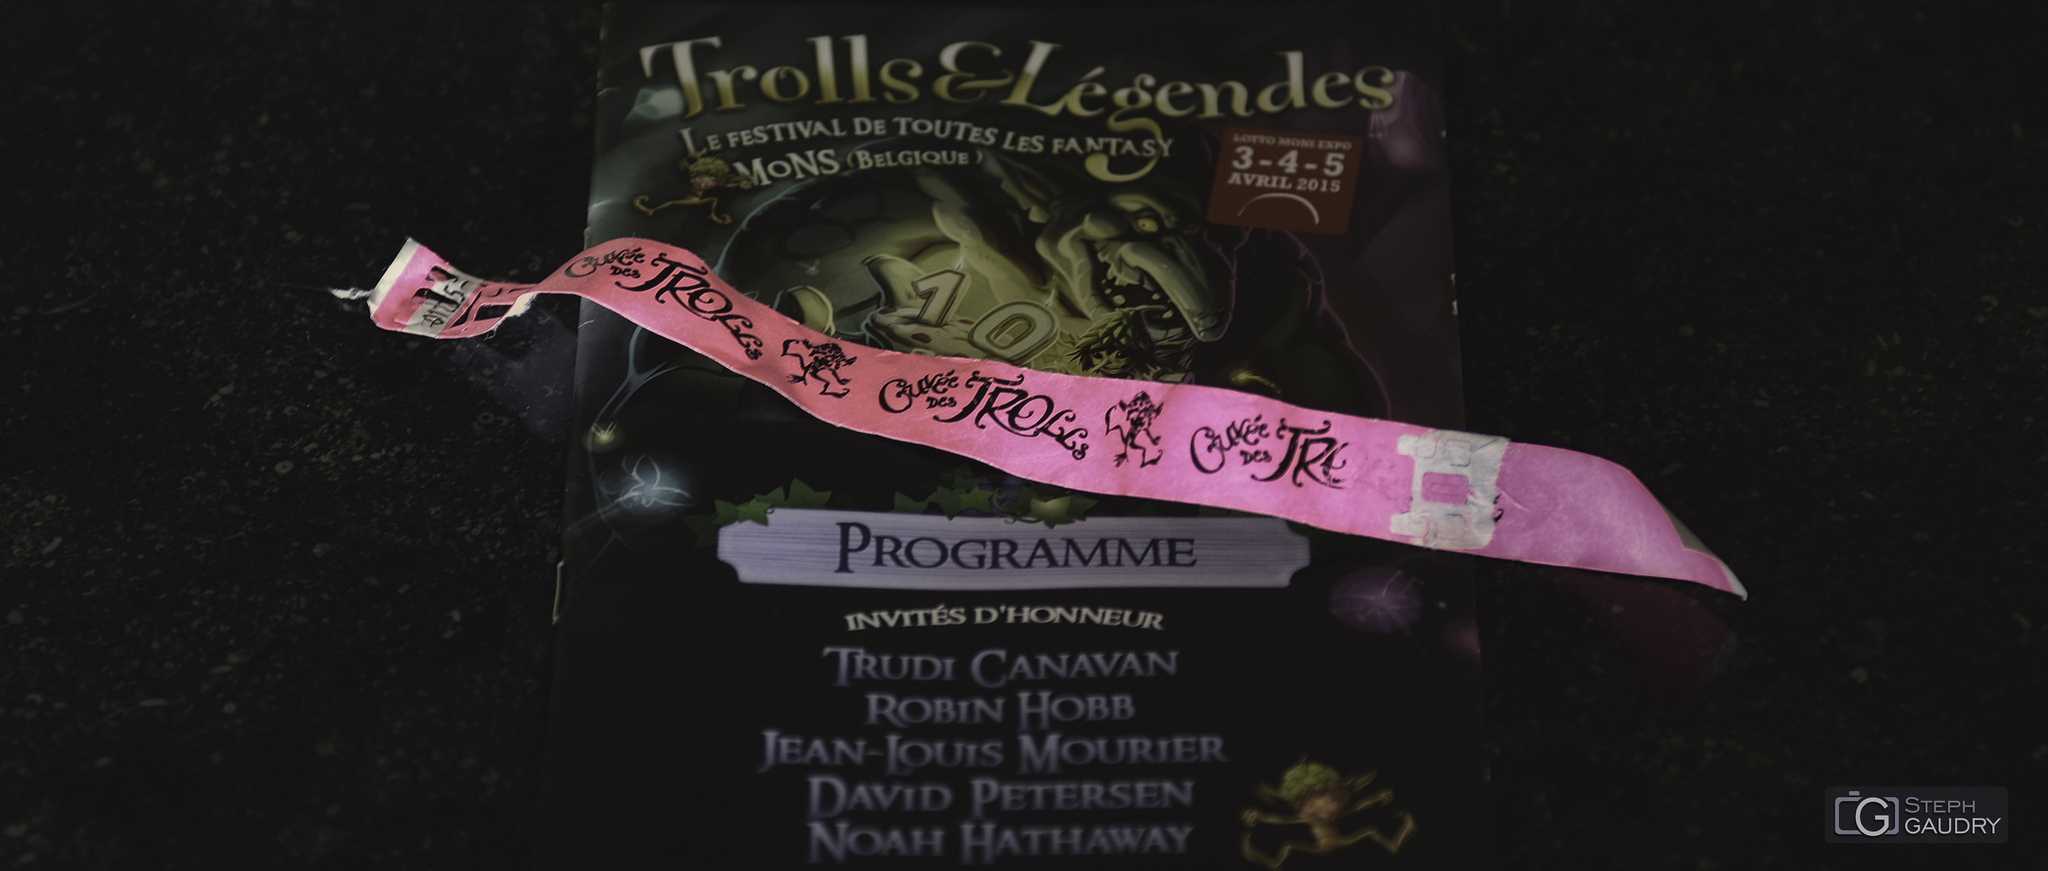 Trolls & Légendes 2015 [Klik om de diavoorstelling te starten]